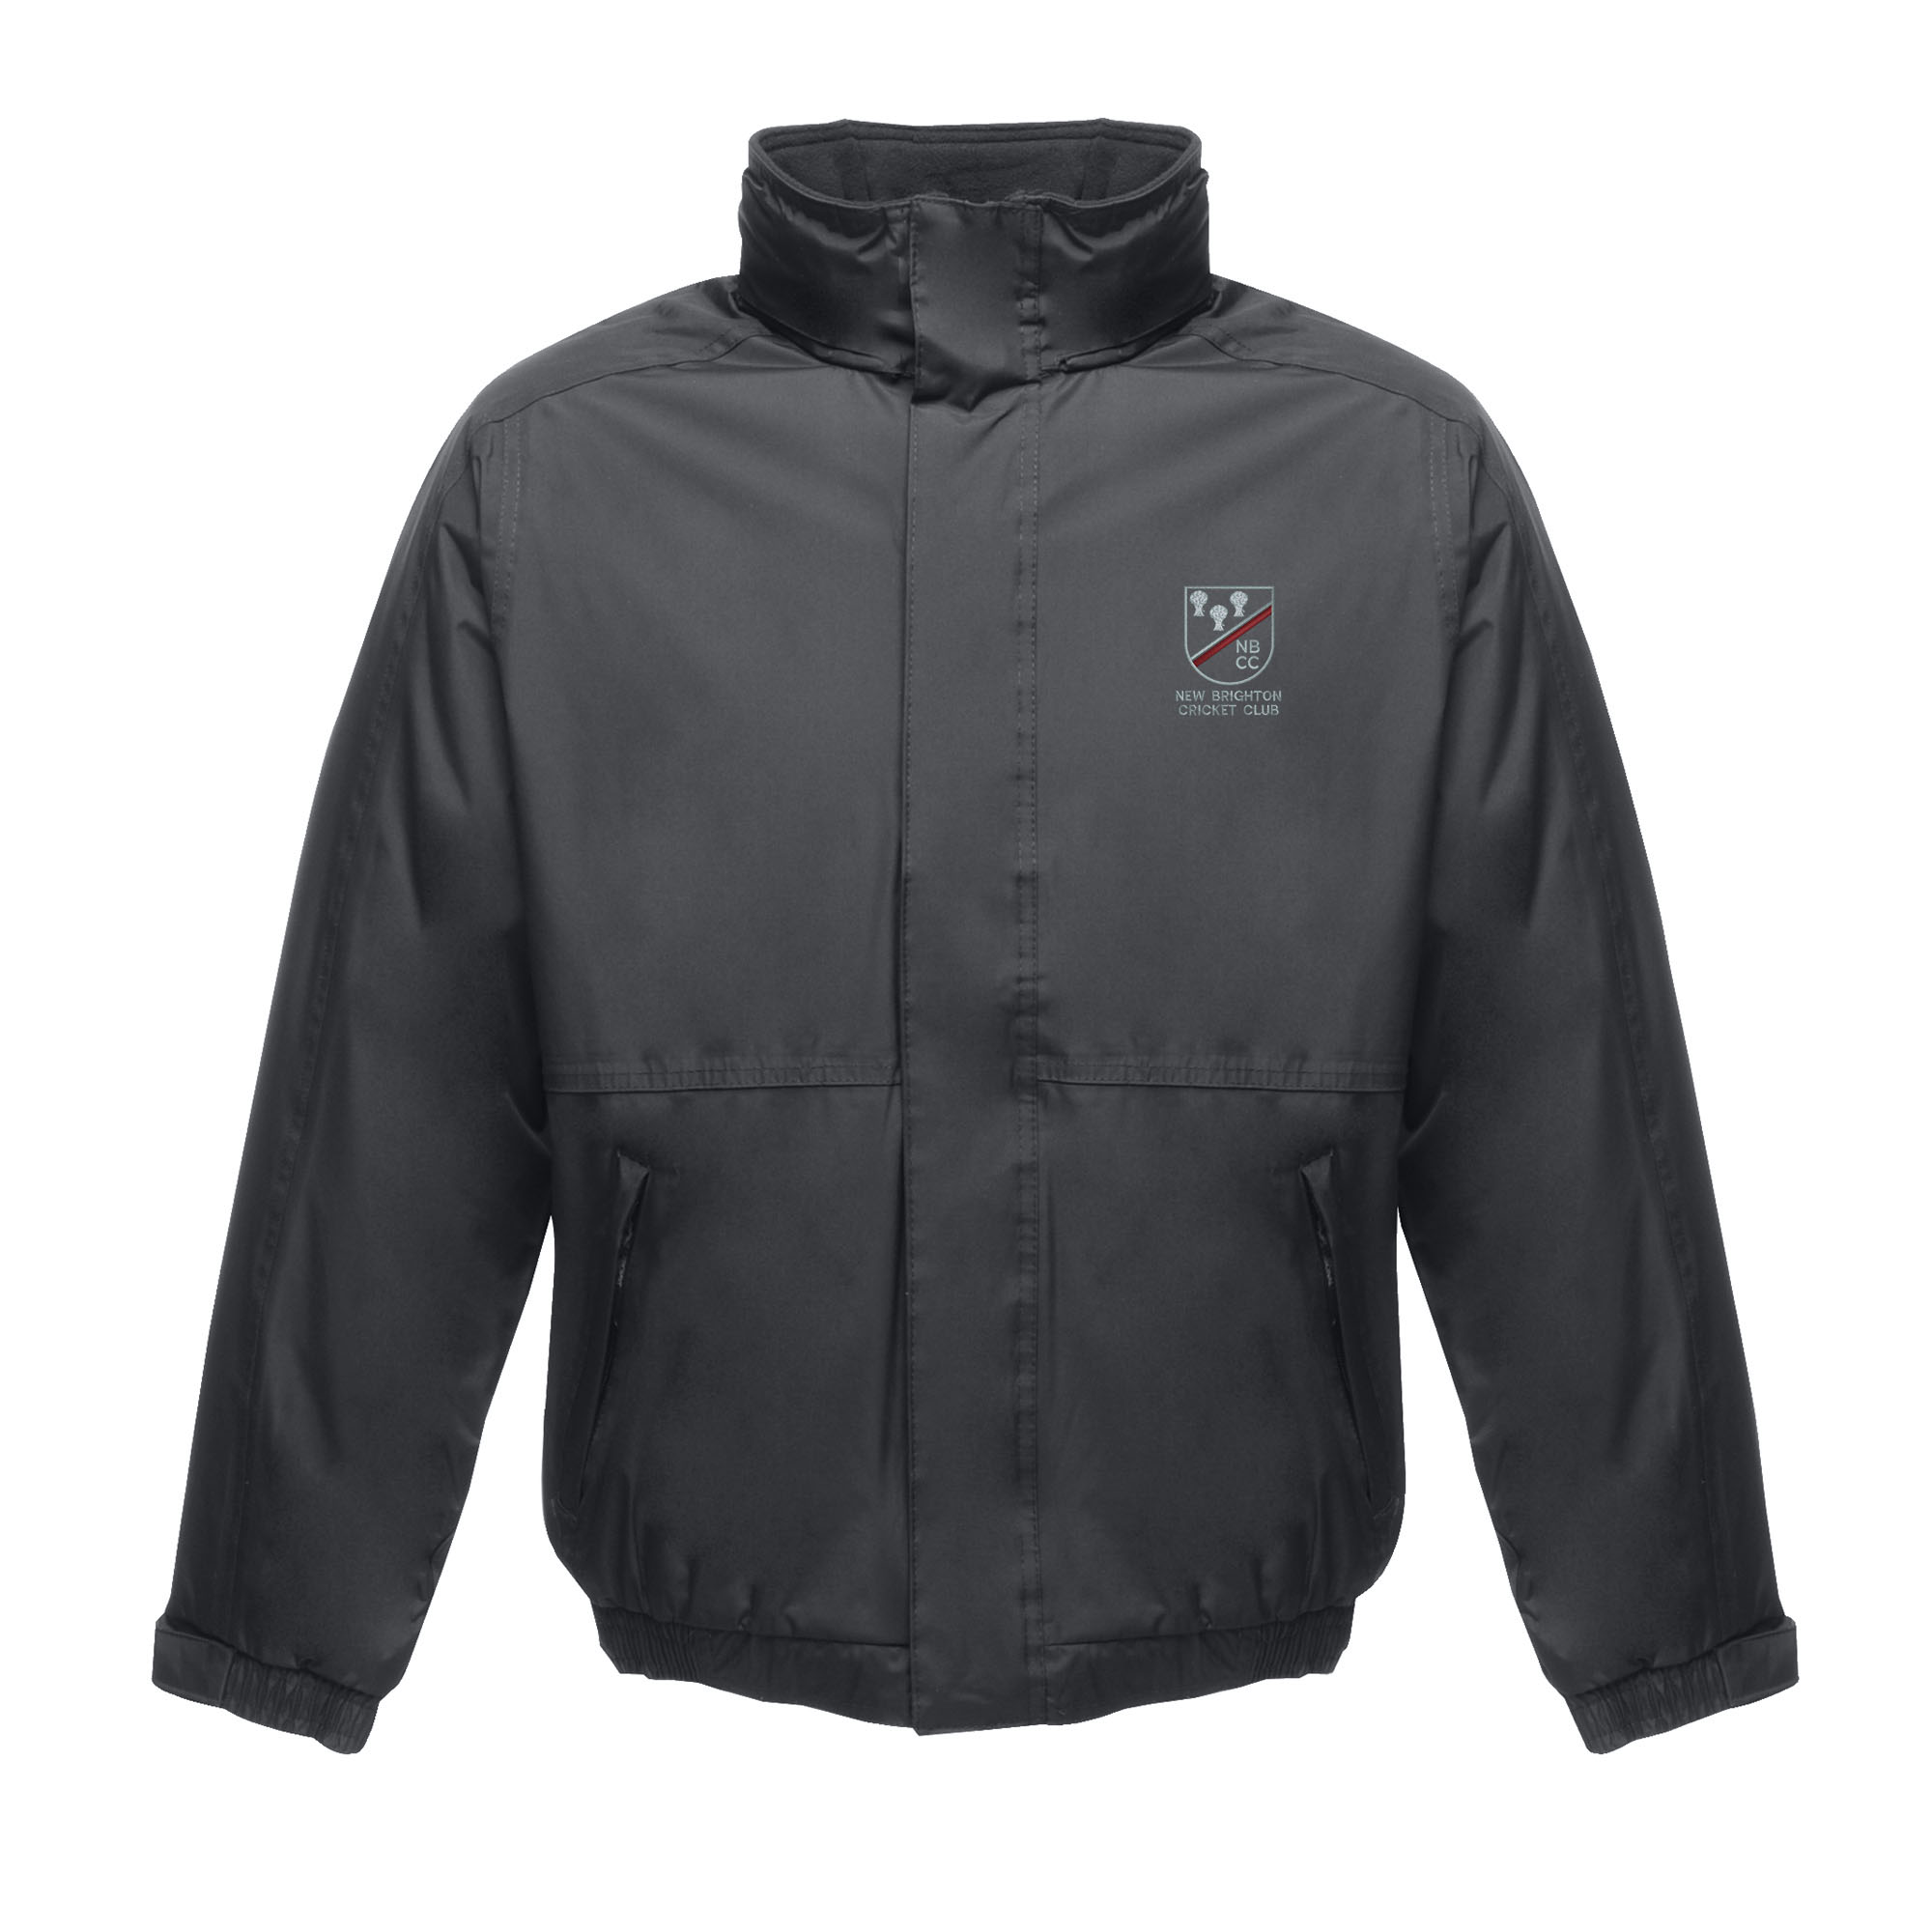 Waterproof Jacket with Fleece Lining